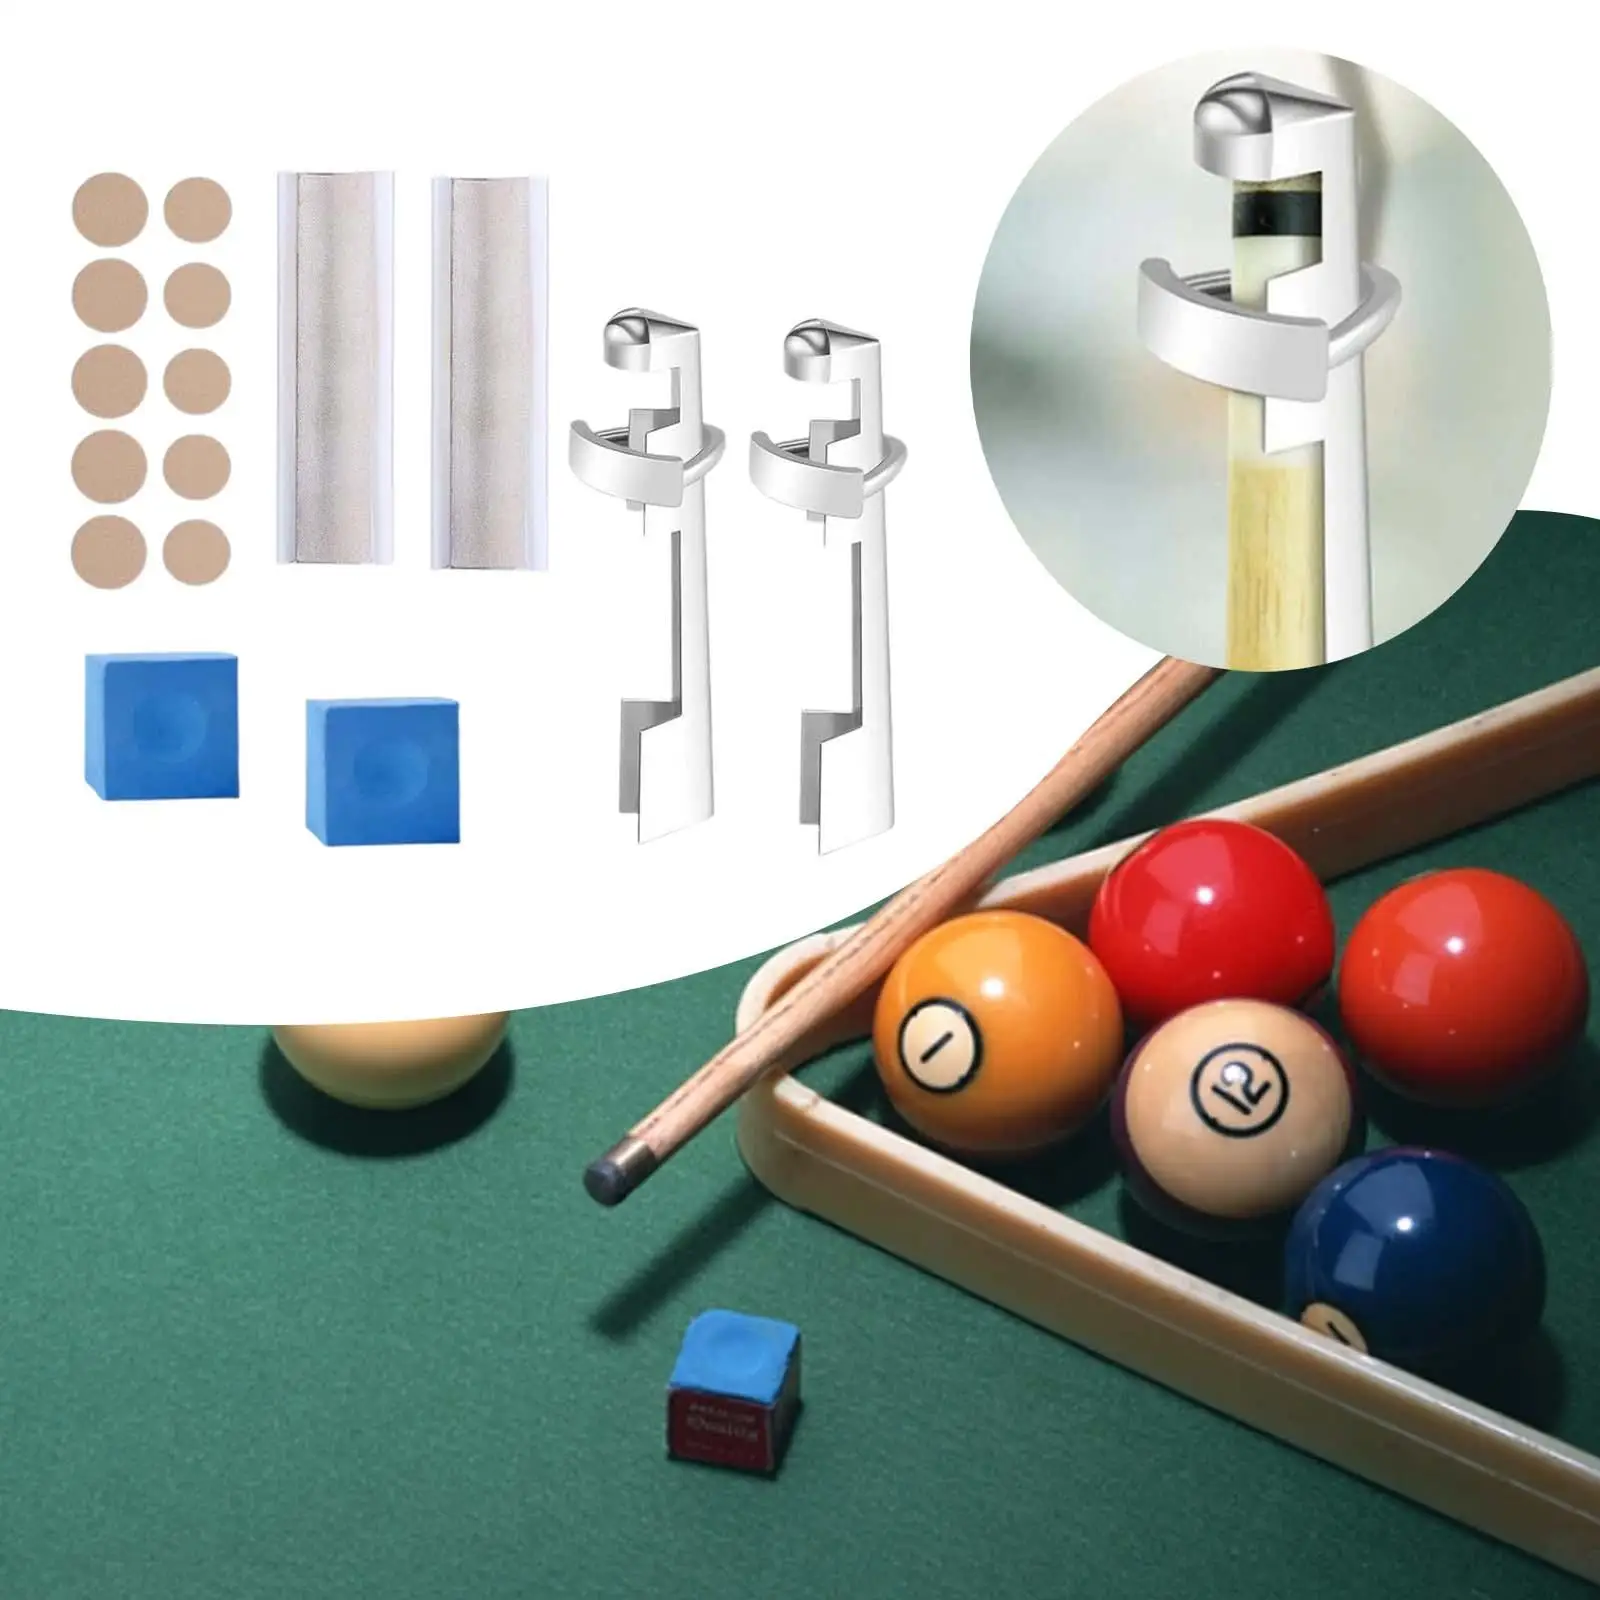 16Pcs Pool Cue Tip Repair Kit Cue Tip Repair Clamp Chalk Cubes Table Pool Accessories Snooker Pool Supplies Pool Table